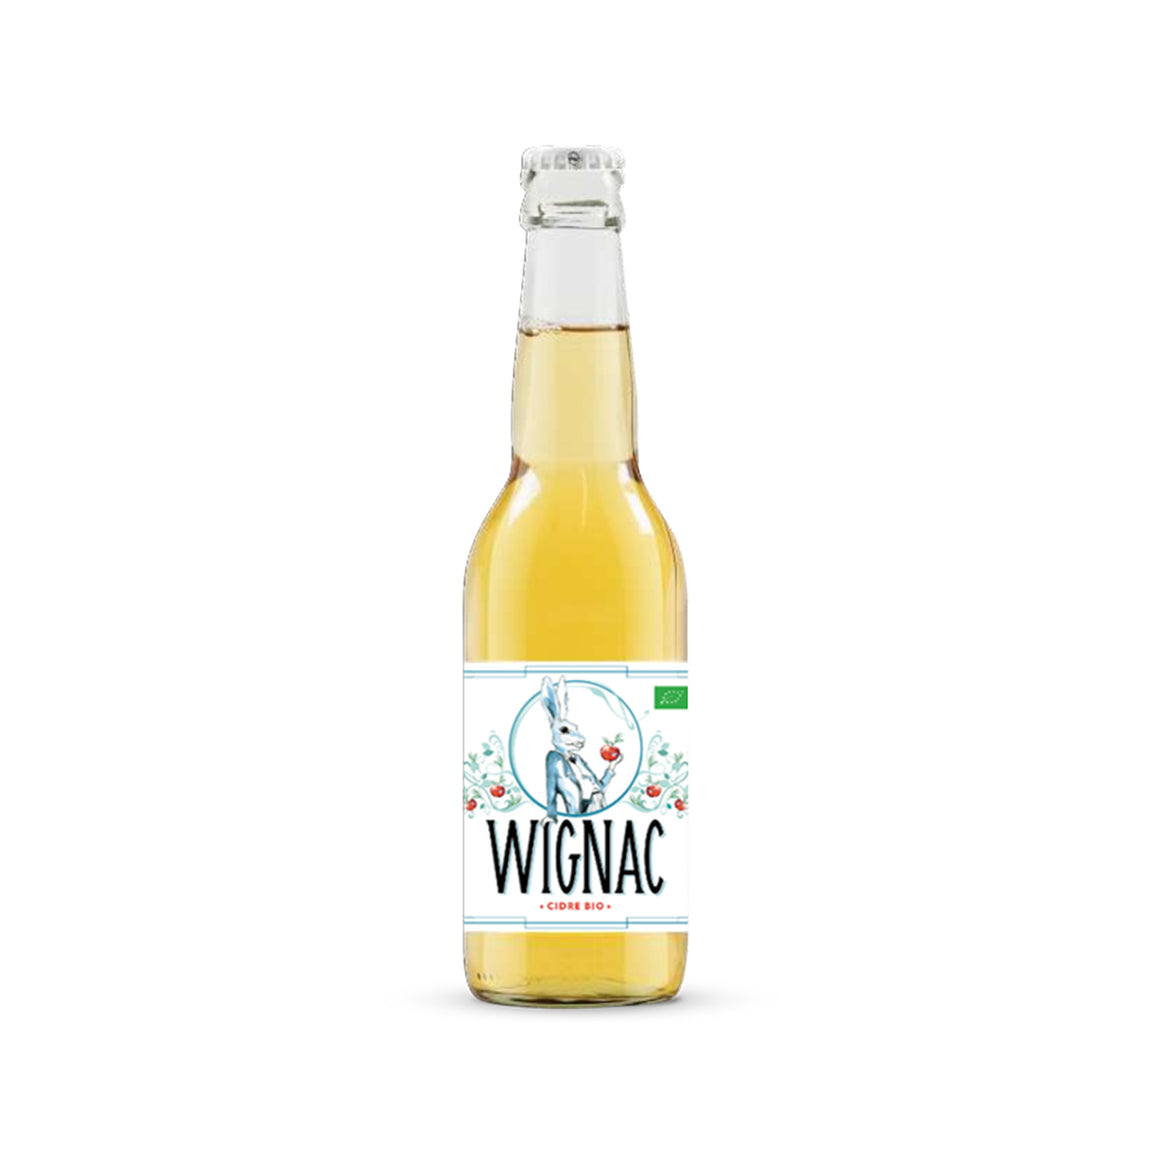 Wignac Le Lièvre Organic Cider - coming soon!